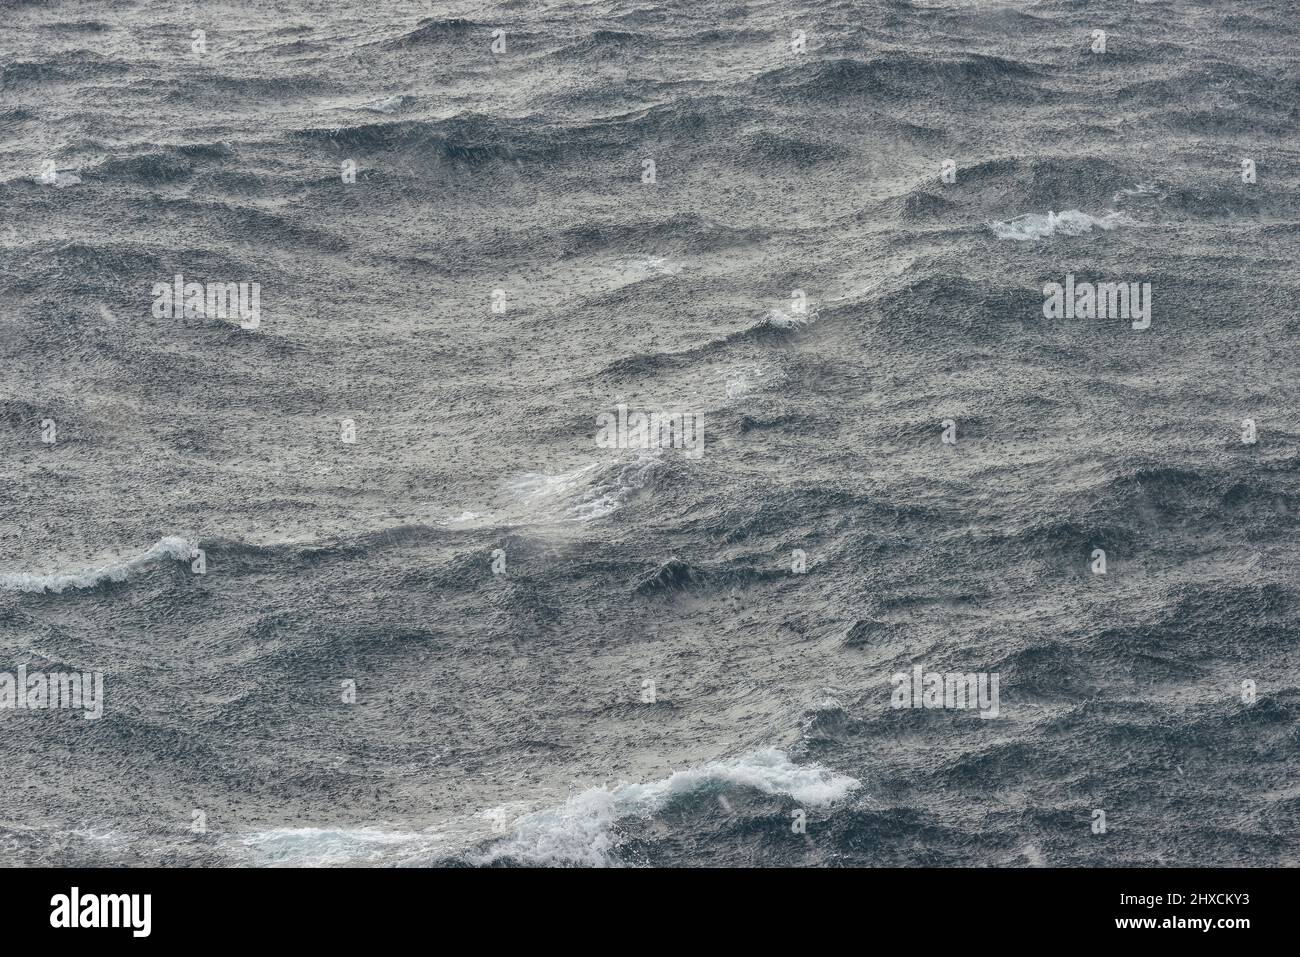 Heavy rain on high waves in sea, Catalonia, Spain Stock Photo